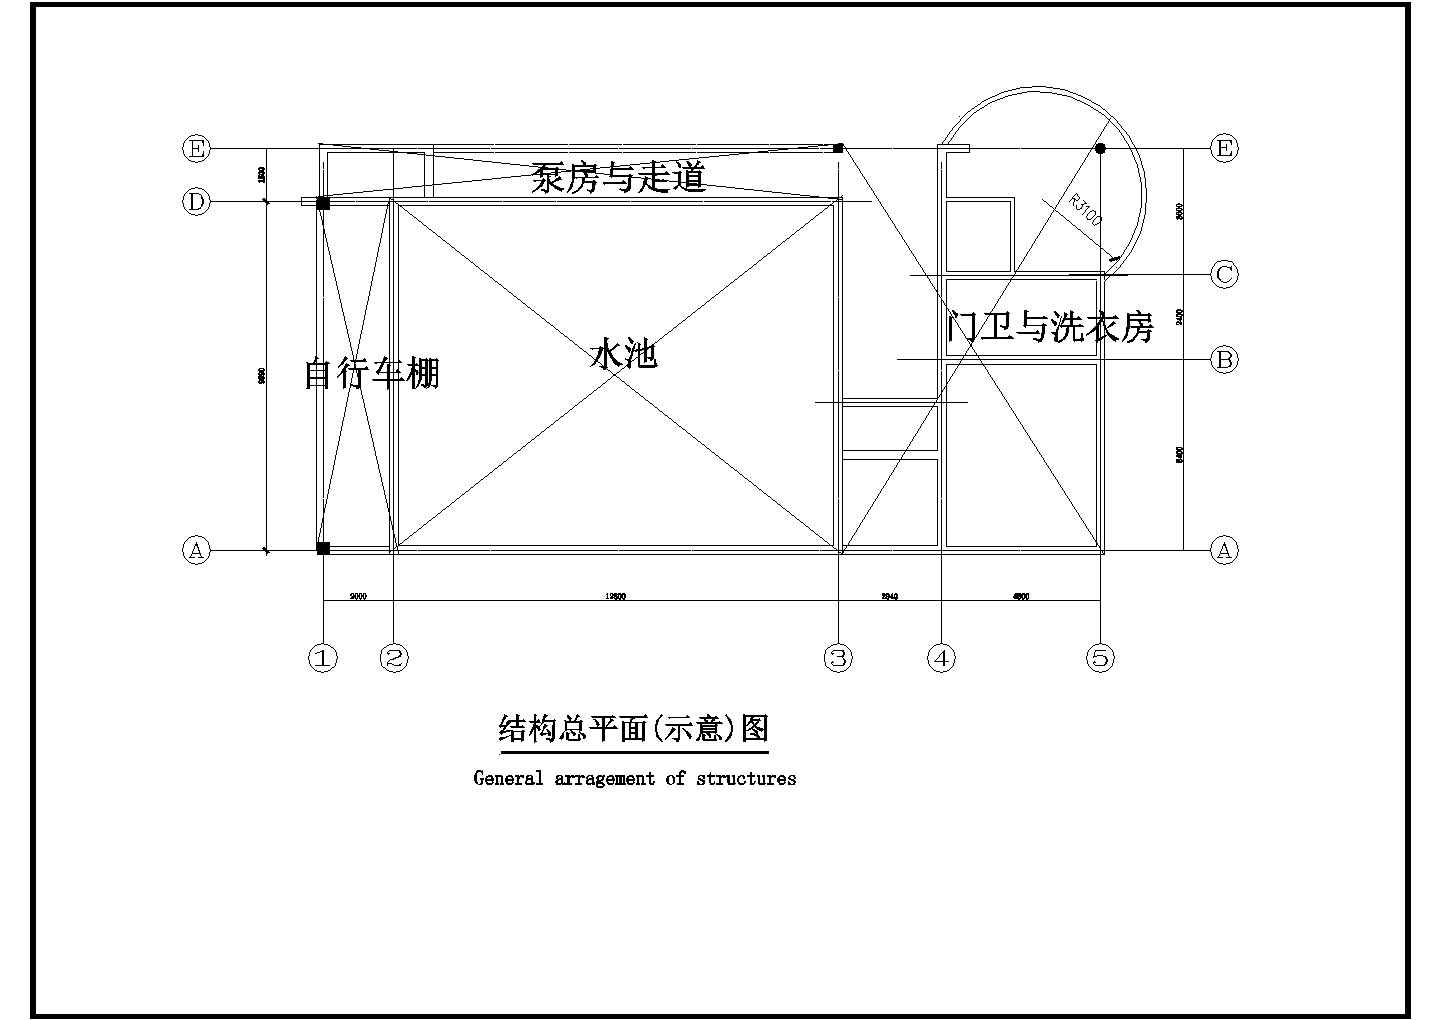 25mm消防水池及附属建筑结构施工设计cad做法方案图纸(中英文标注)